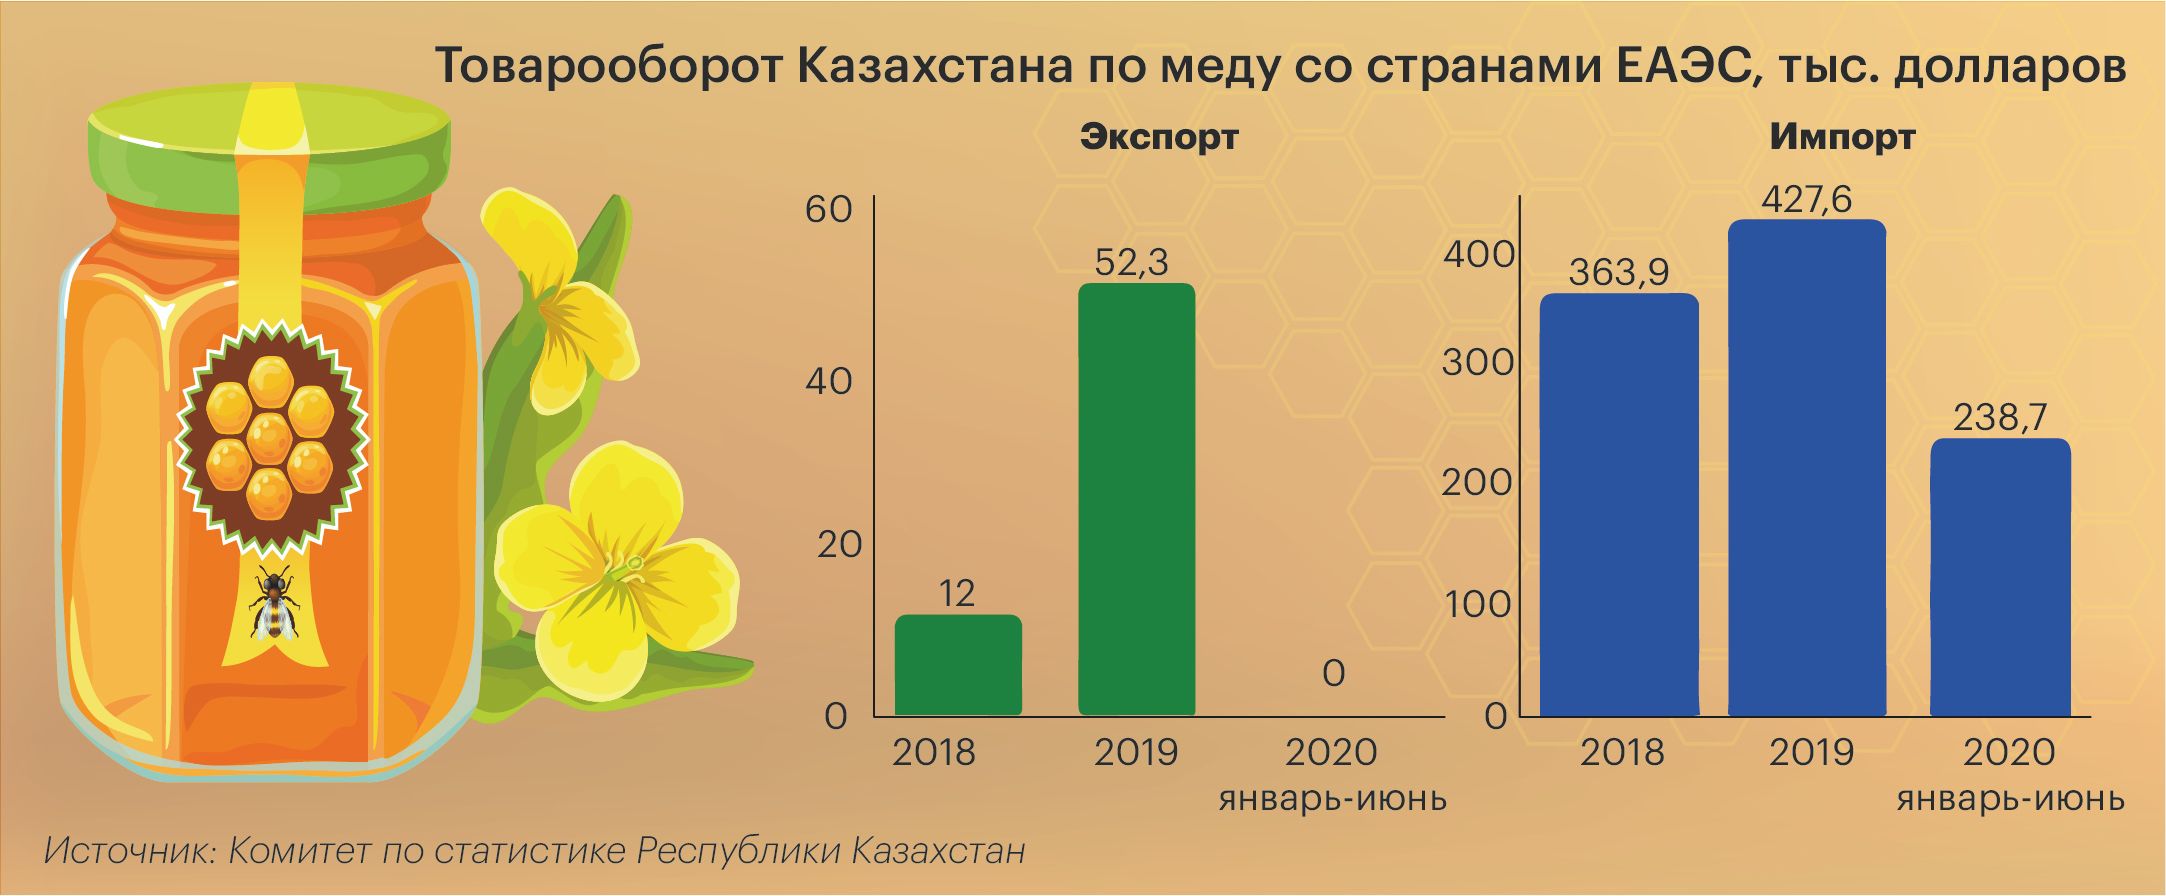 Импорт меда в России статистика